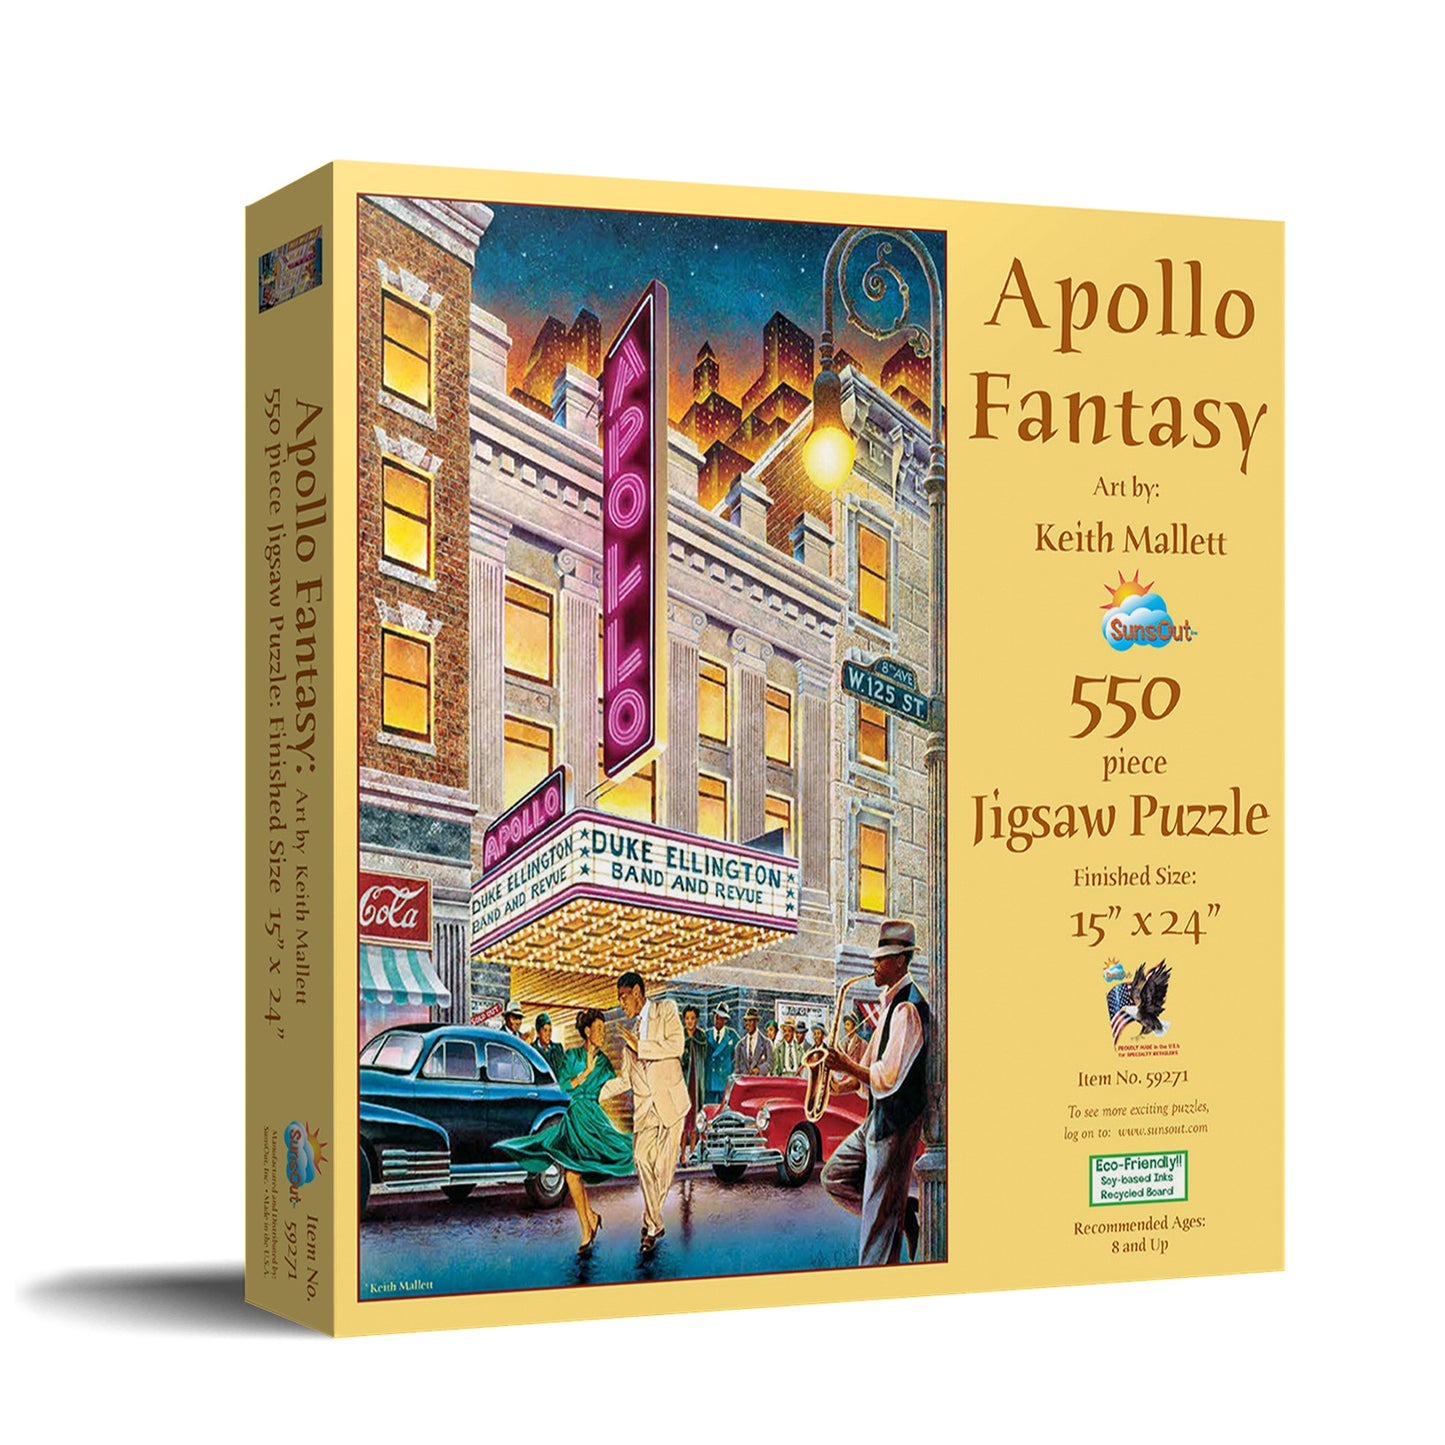 Apollo Fantasy - 550 Piece Jigsaw Puzzle